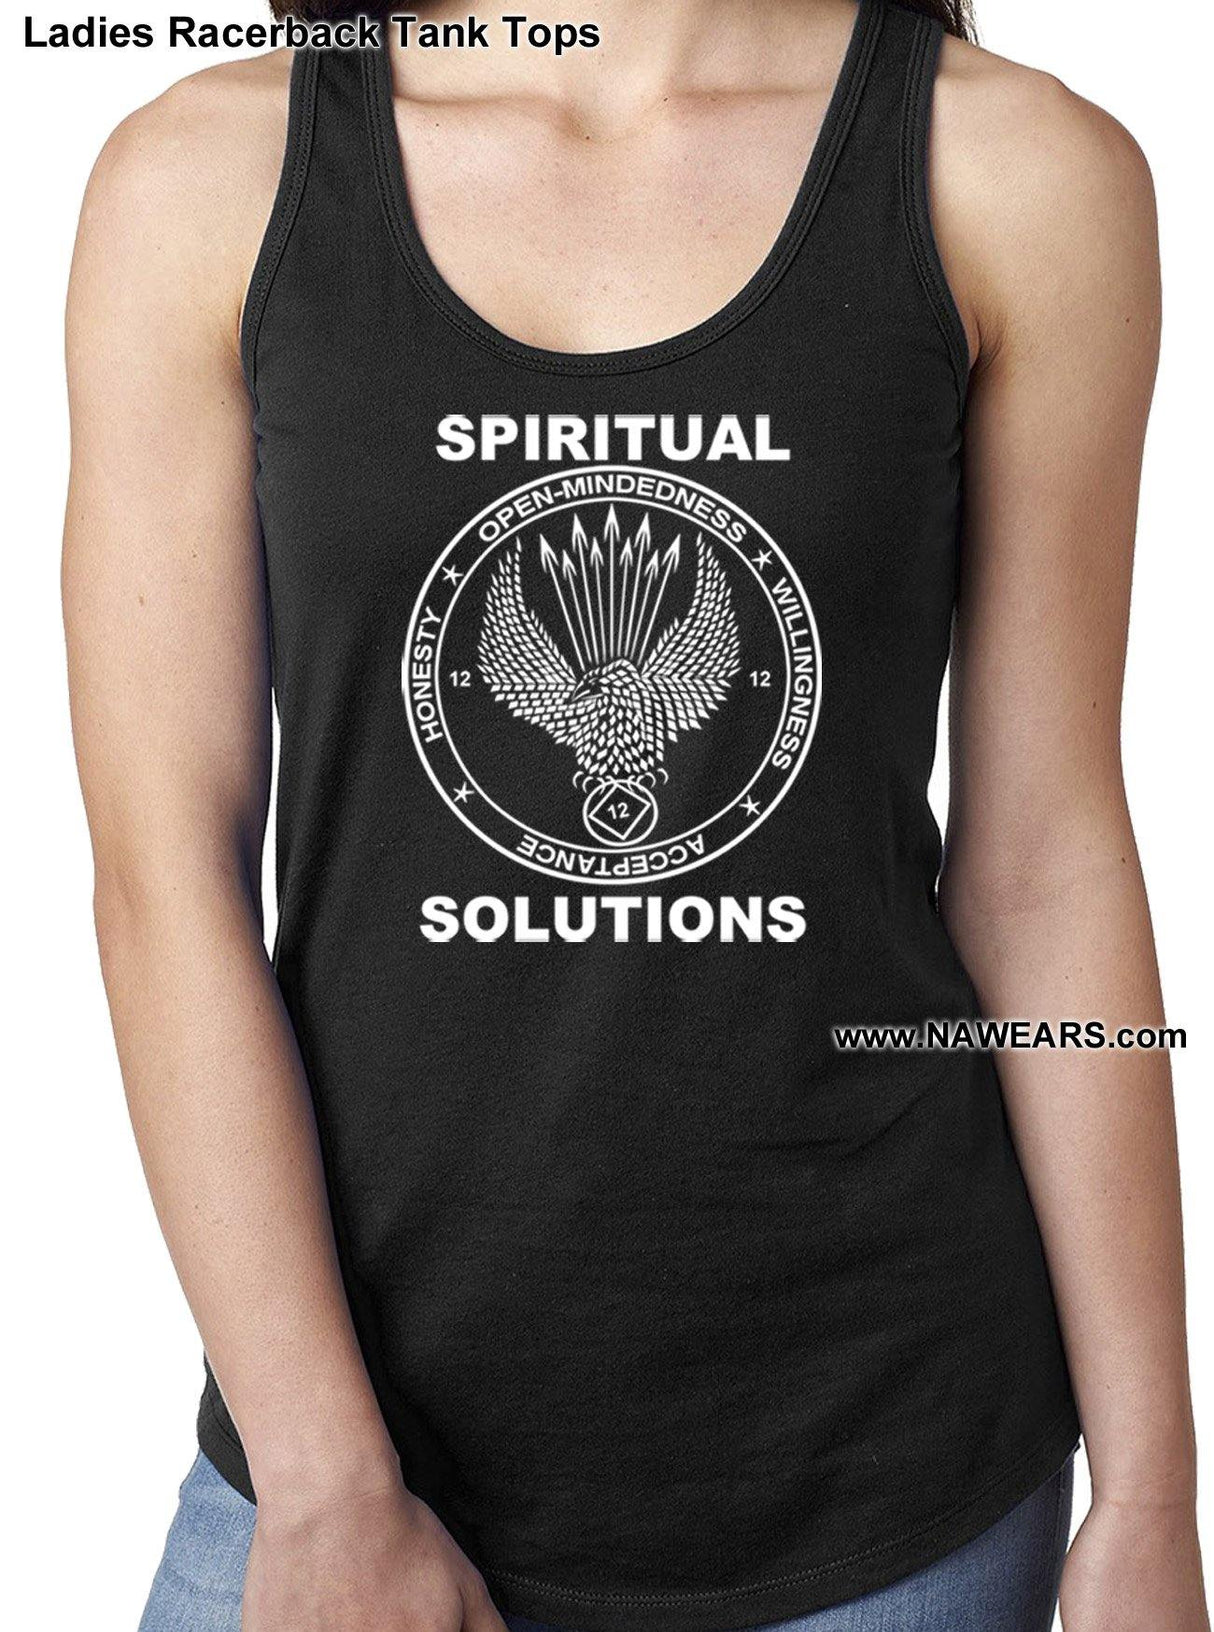 ltt- Spiritual Solutions - Ladies Tank Tops - nawears